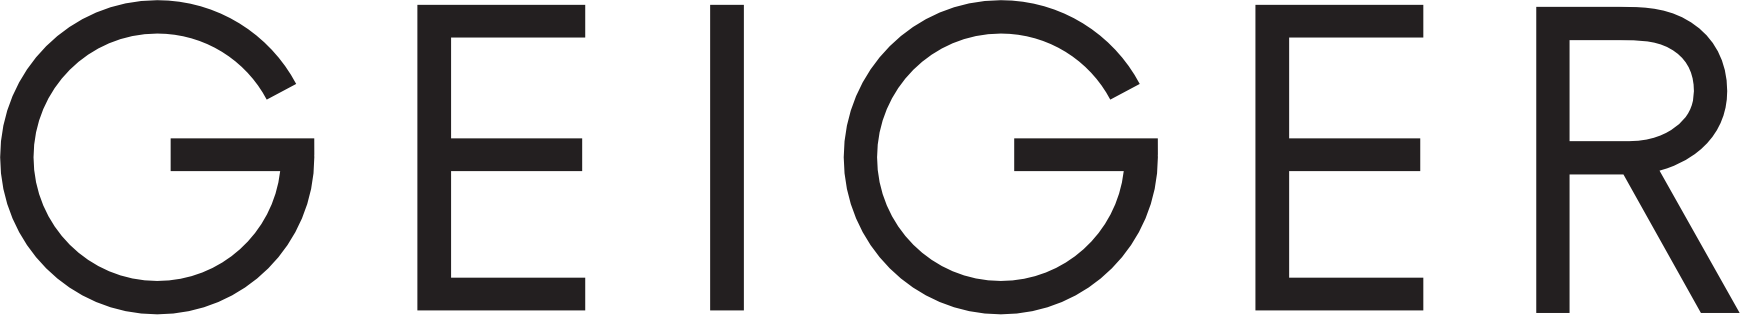 geiger logo | Bella's Office